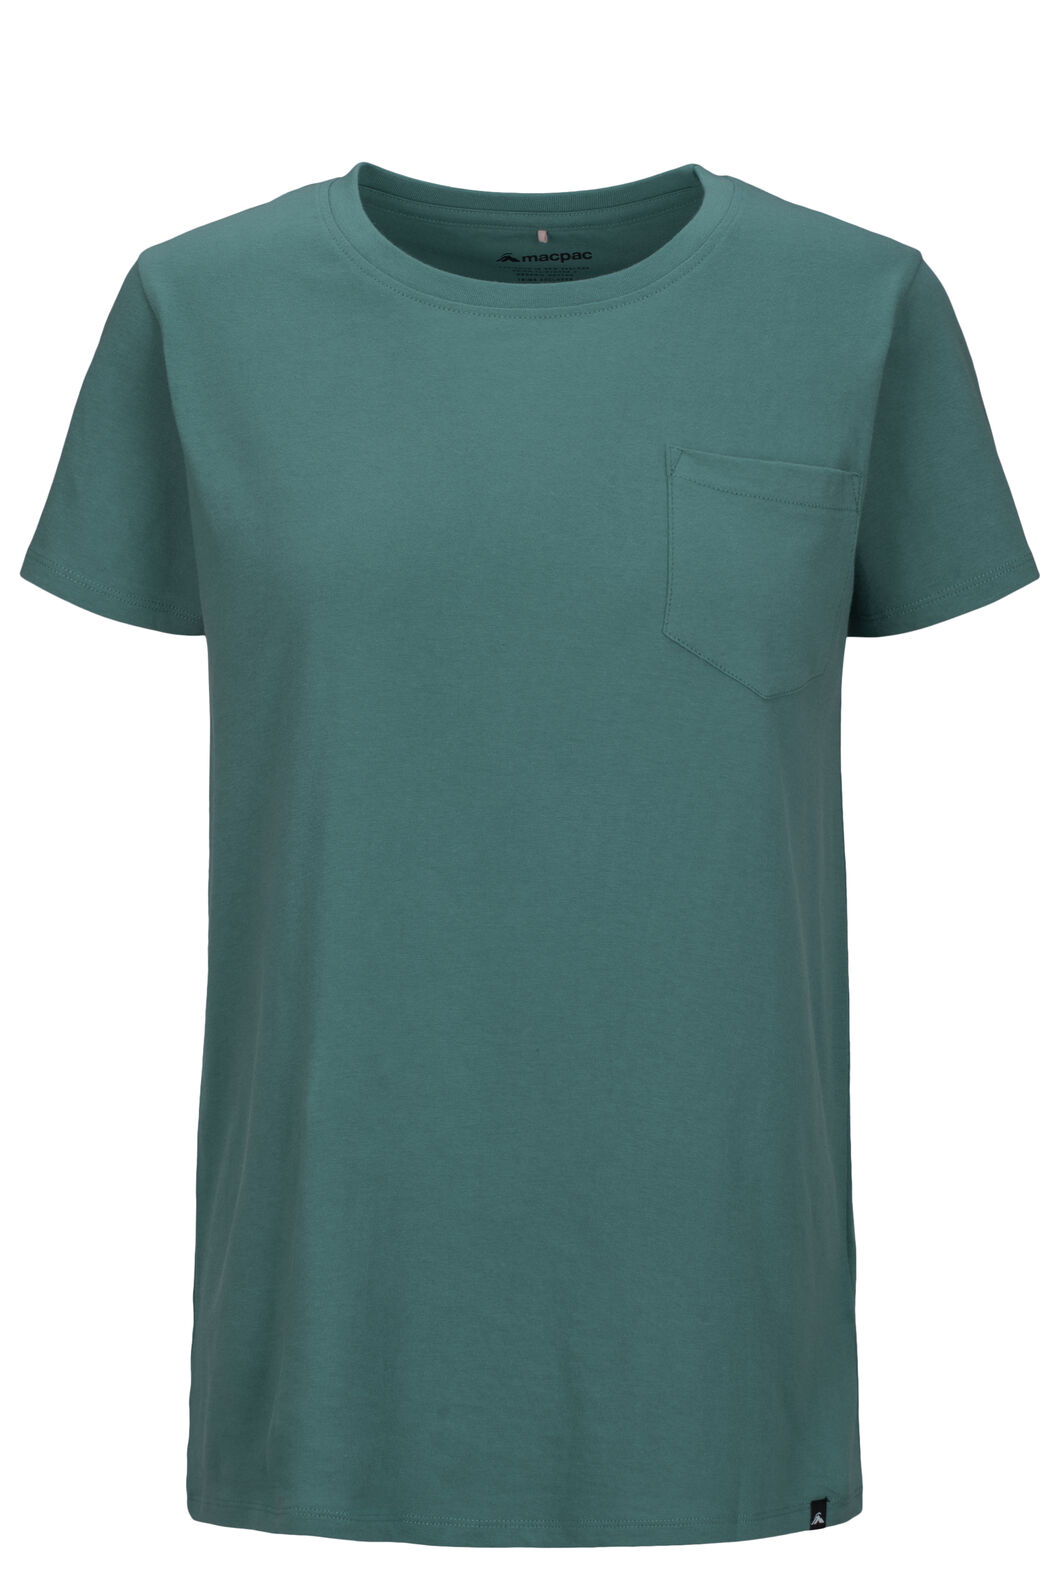 Macpac Women's Basic Pocket T-Shirt, Hydro, hi-res